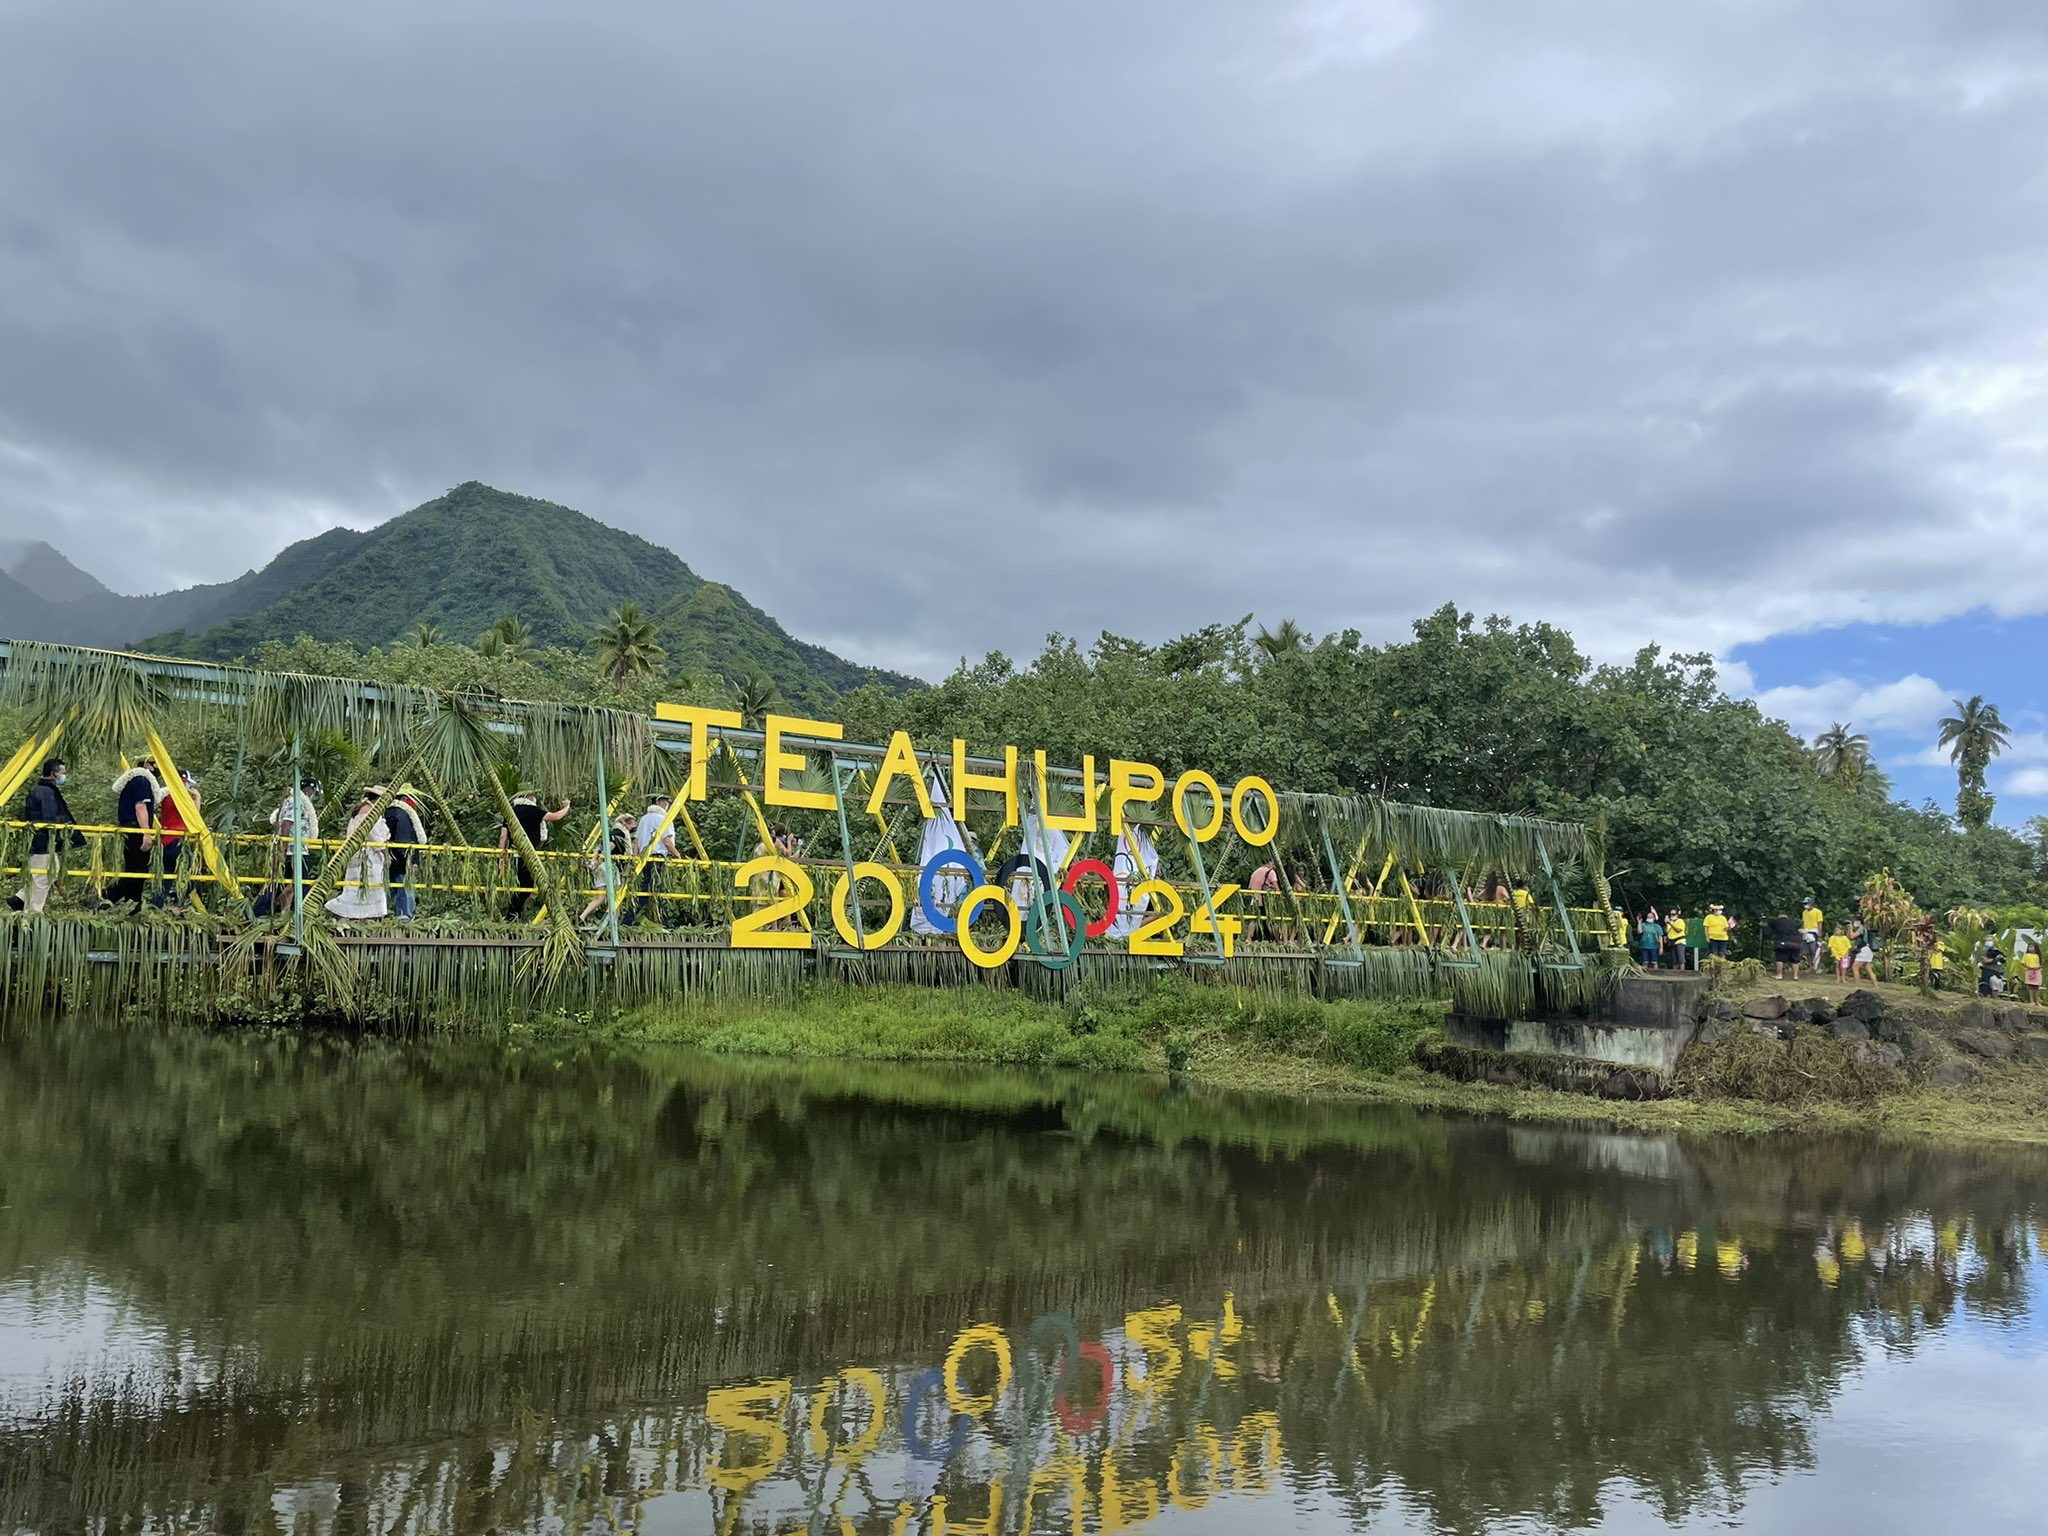 Paris 2024 held a flag ceremony in Teahupo’o ©FFSurf